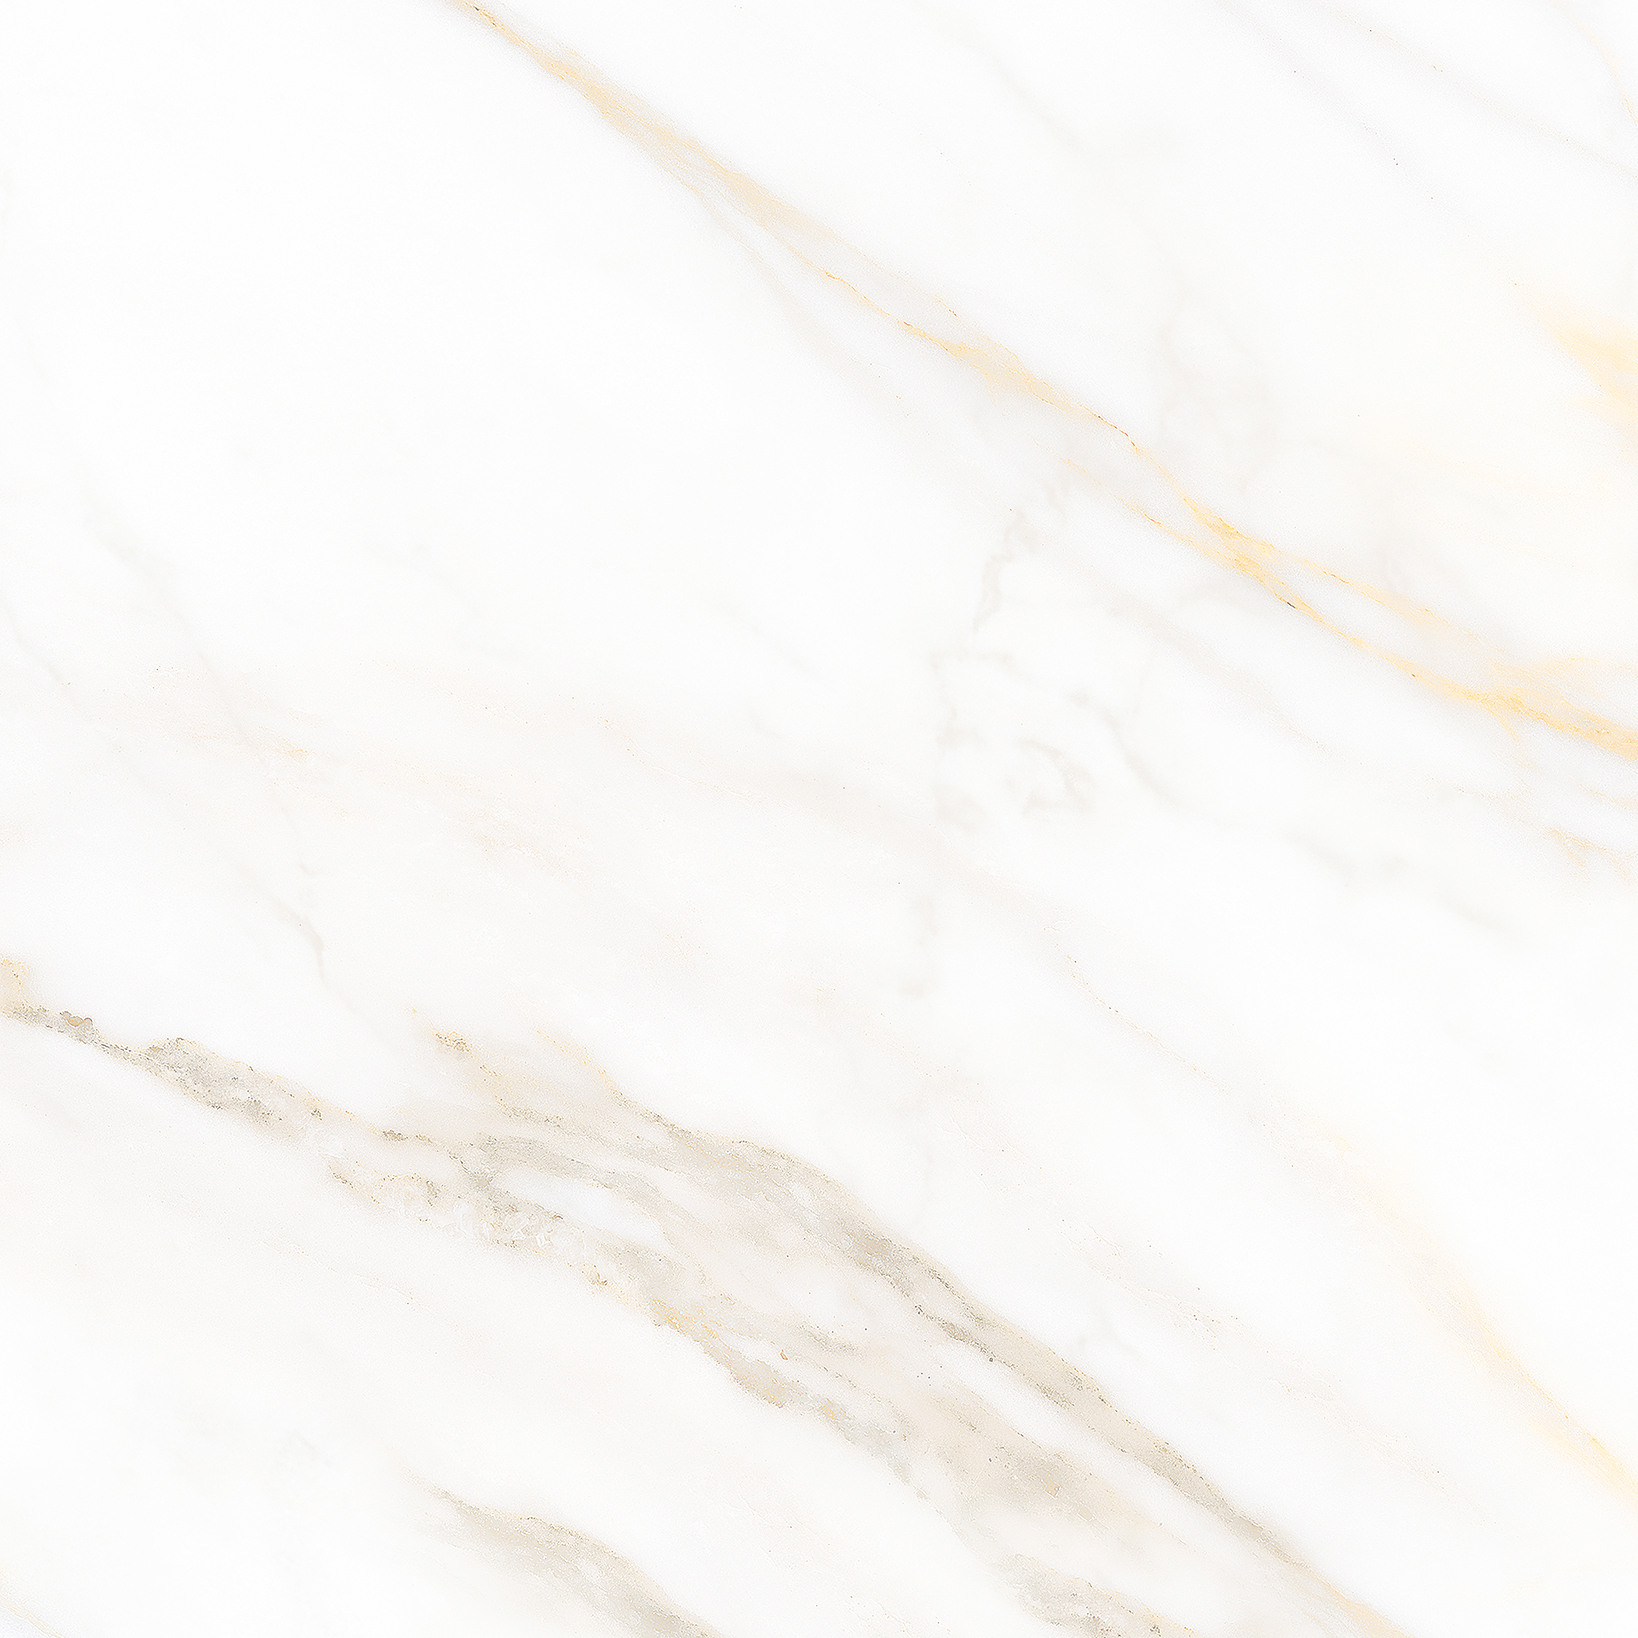 Natural white marble  background,  italian carrara stone texture